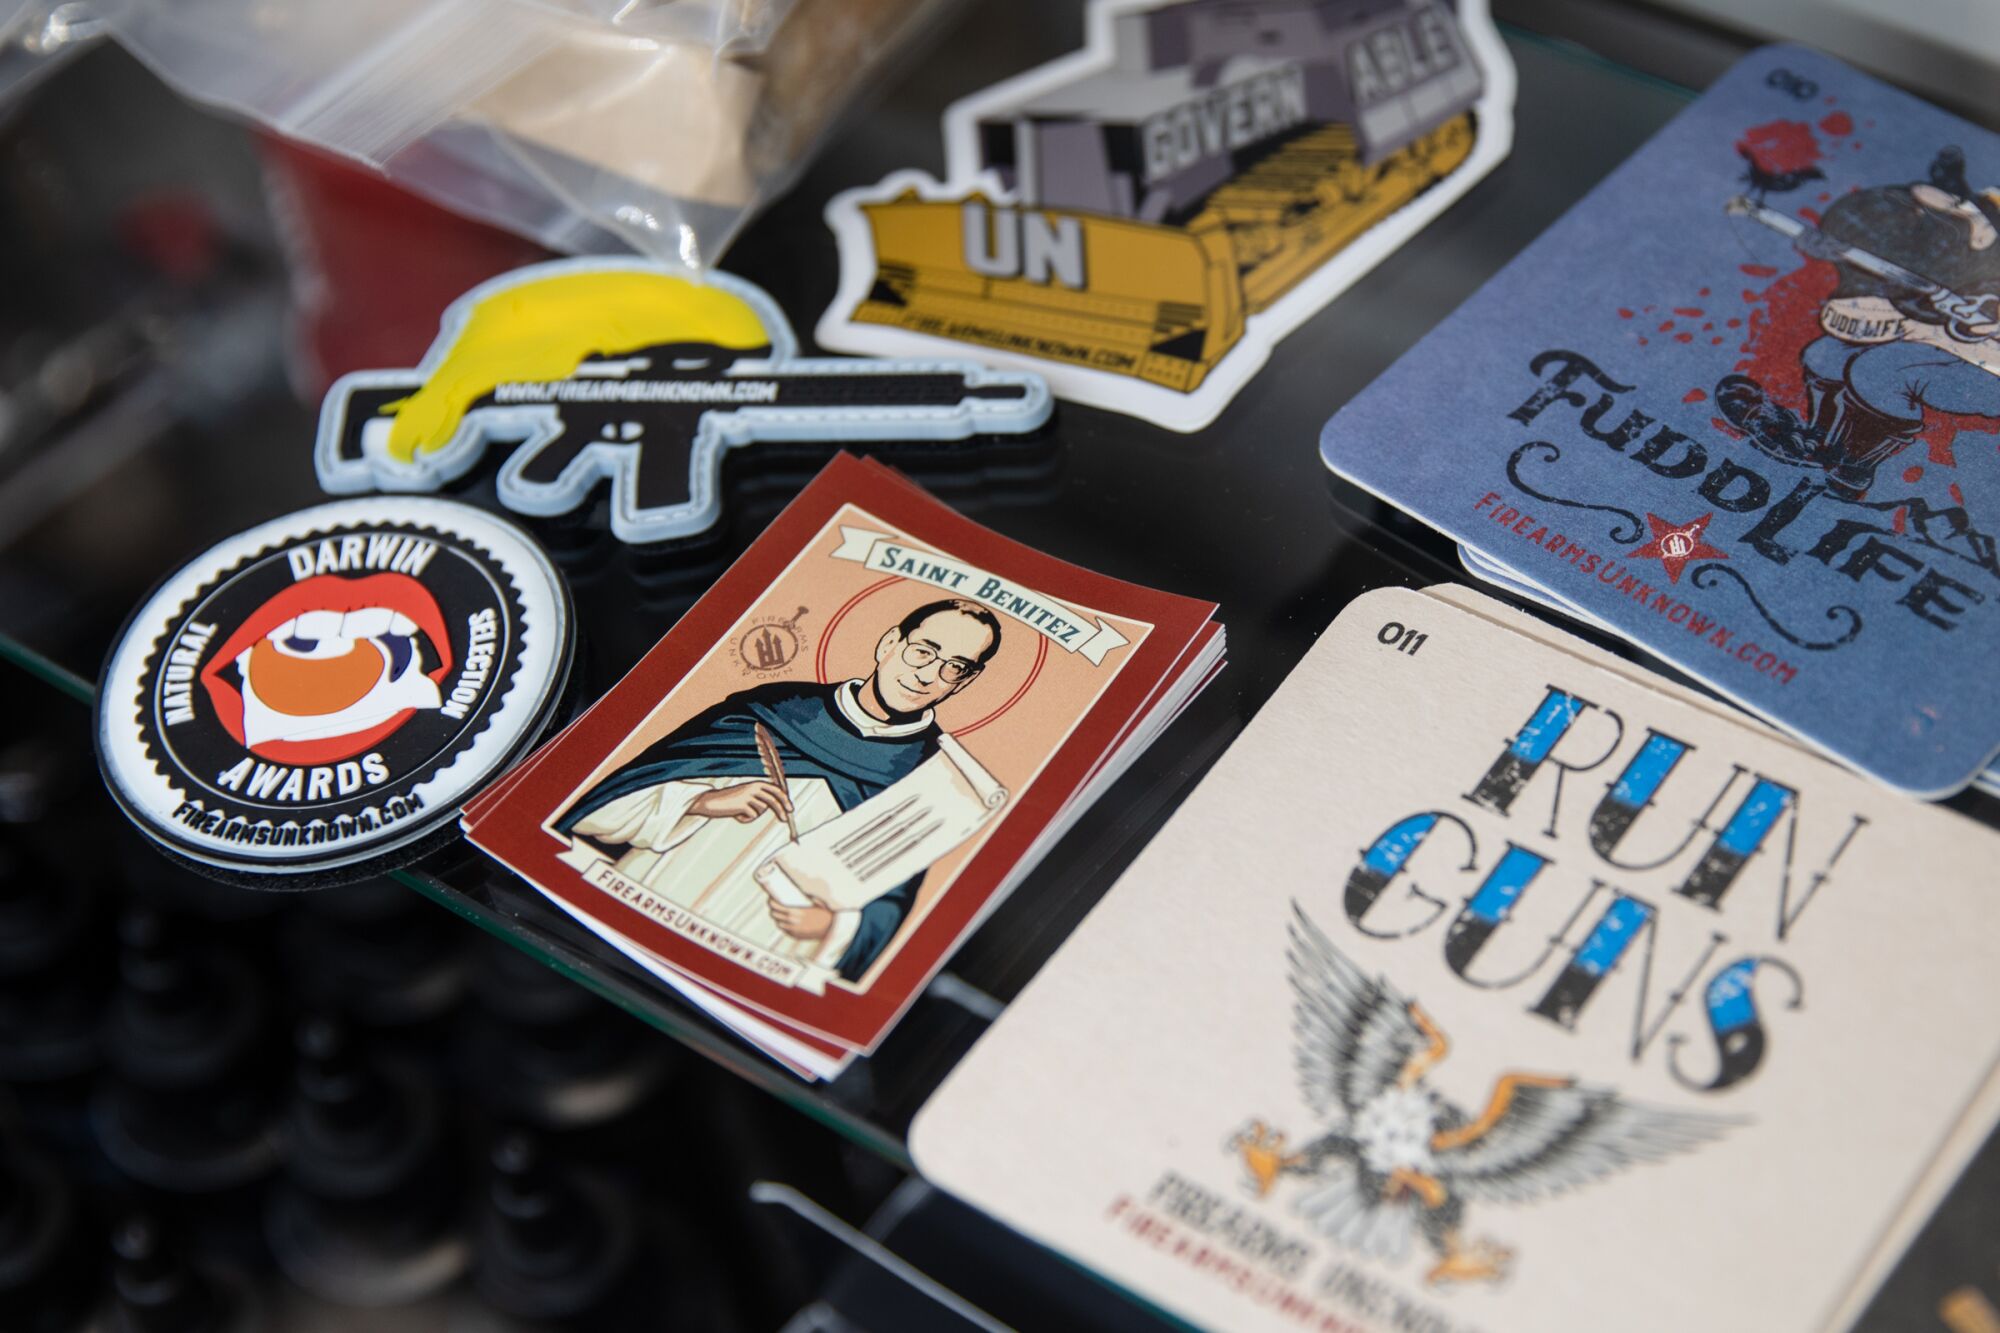 “Saint Benitez” stickers depicting U.S. District Judge Roger Benitez are sold for $1 at Hiram’s Guns